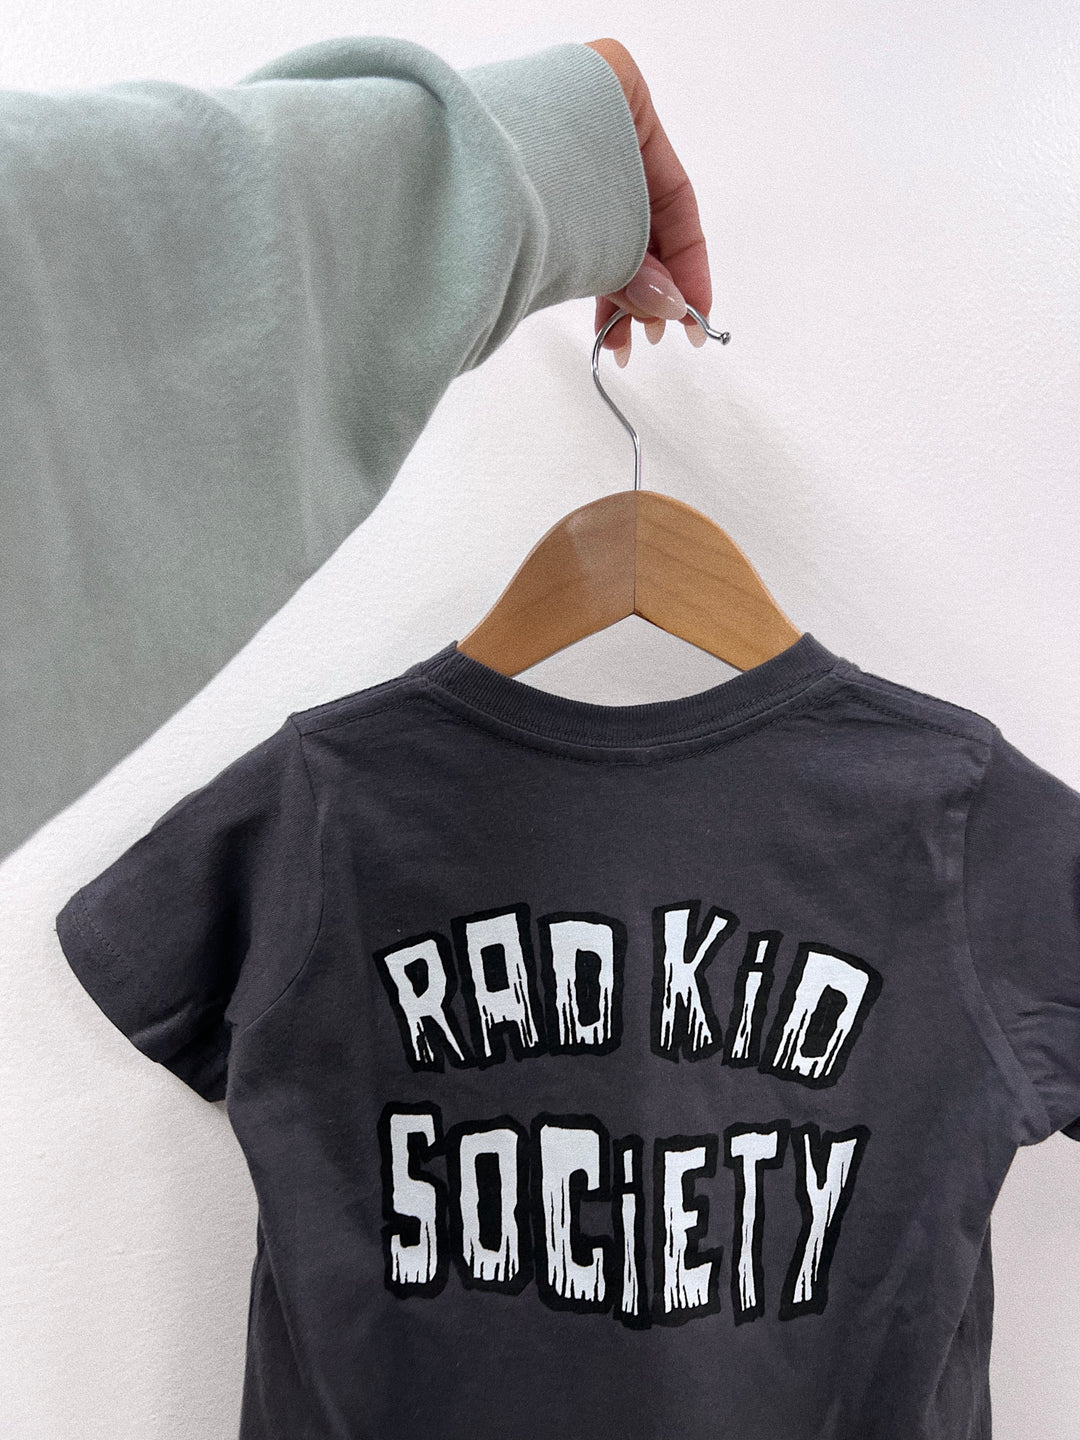 Rad Kid Society Tee